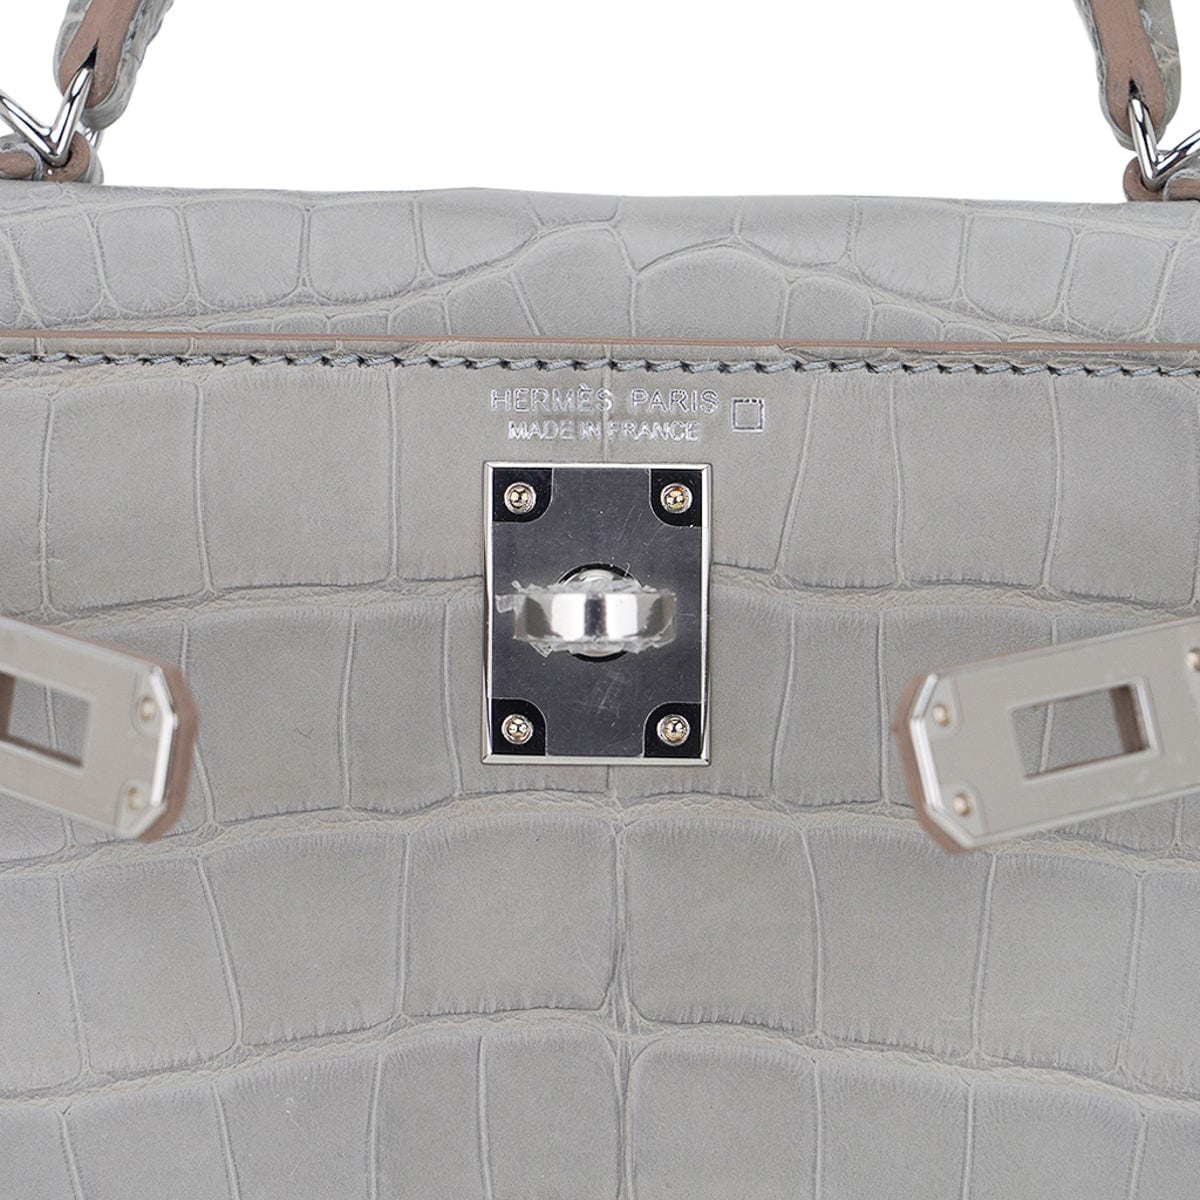 Hermès Matte Alligator Mini Kelly II Sellier 20 - Yellow Mini Bags